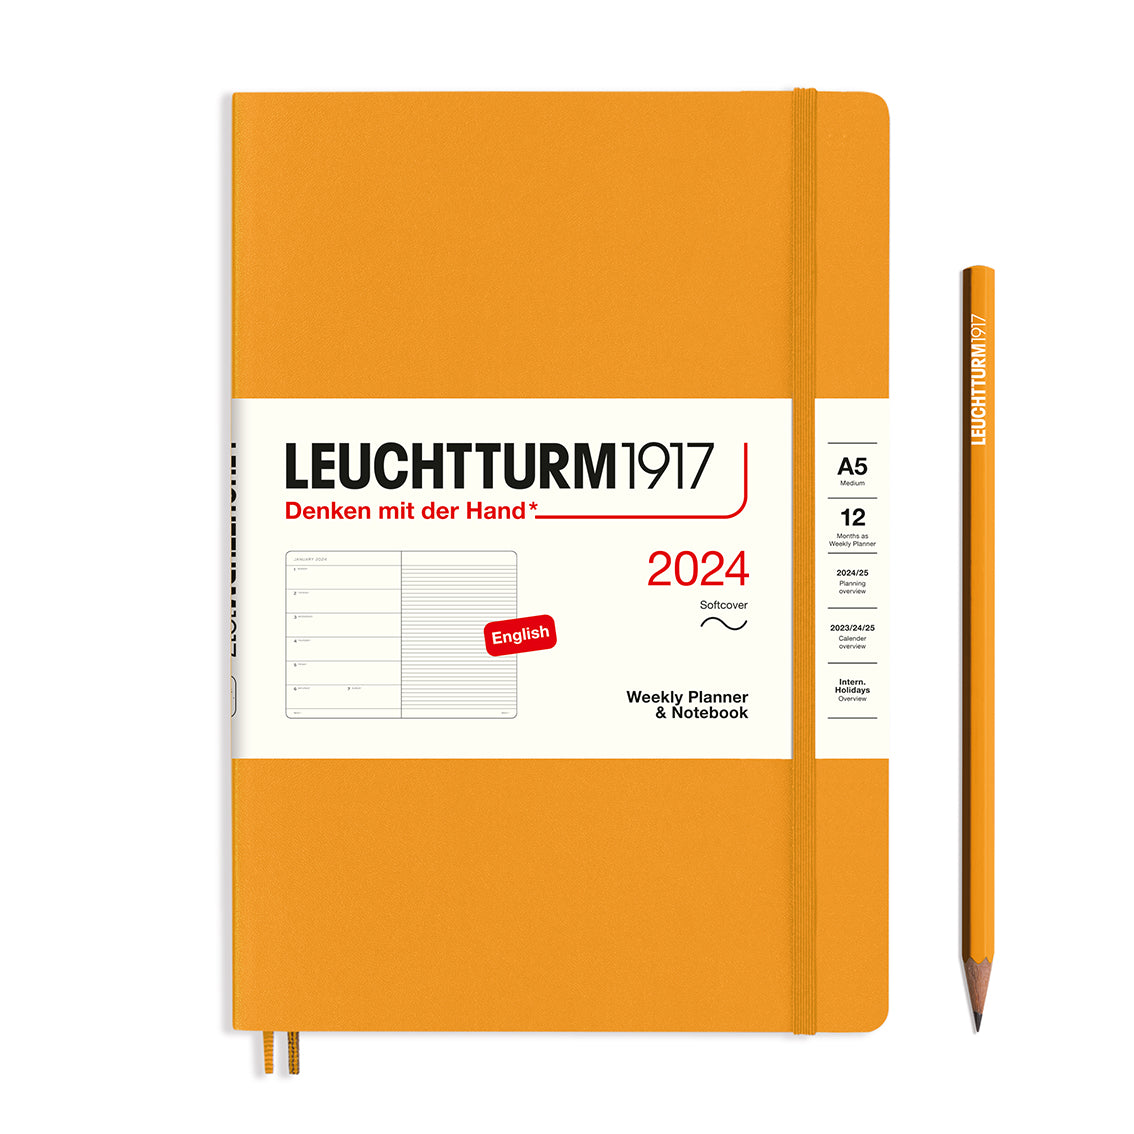 Leuchtturm 2024 agenda softcover medium week met notitie